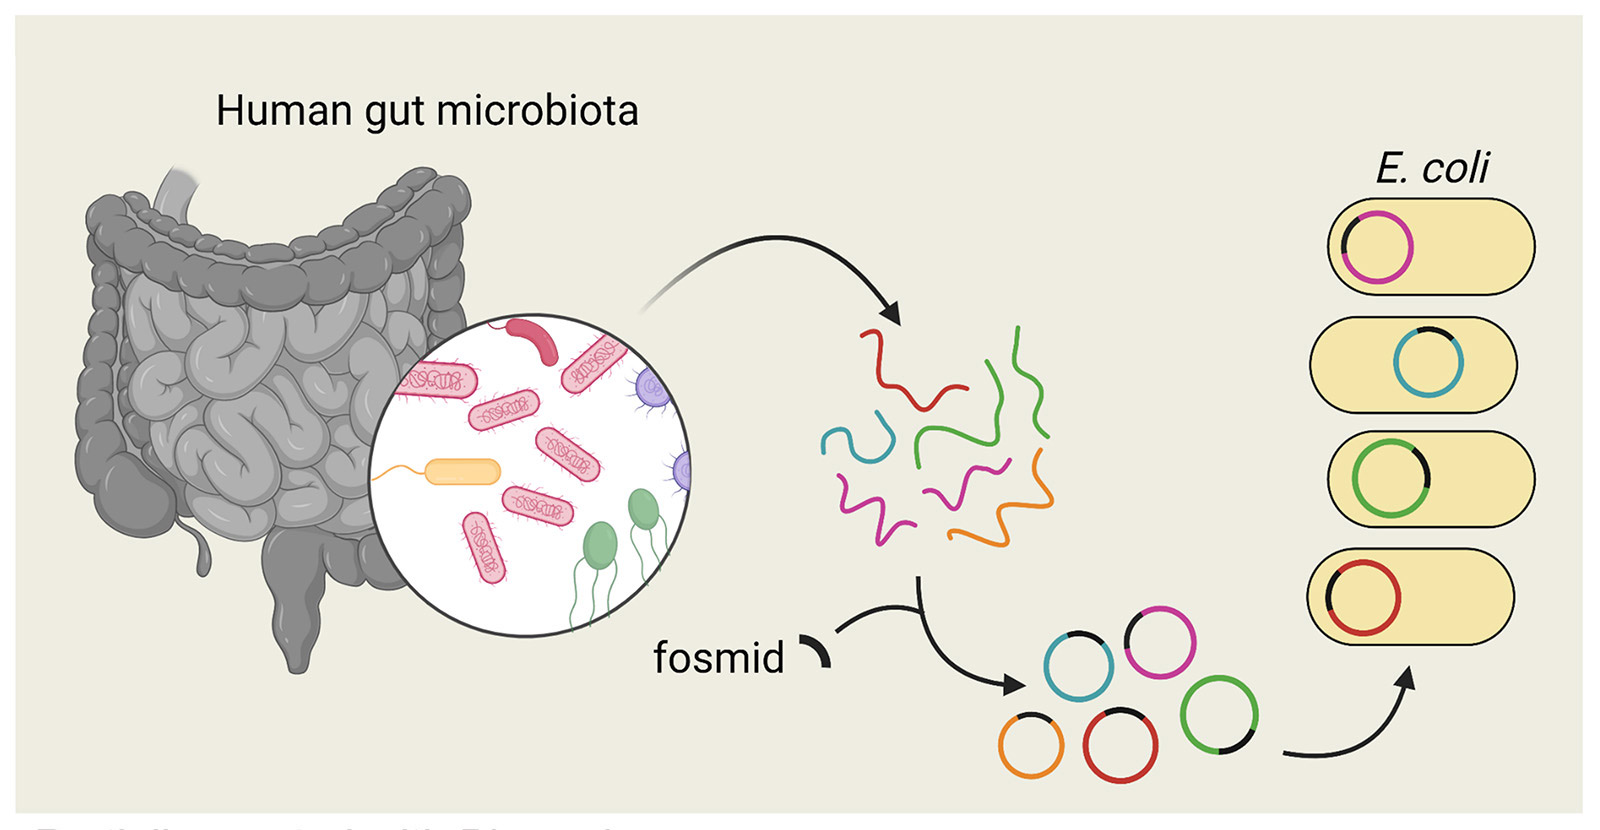 Diagram of human gut microbiota and genetic analysis using fosmid vectors and E. coli.